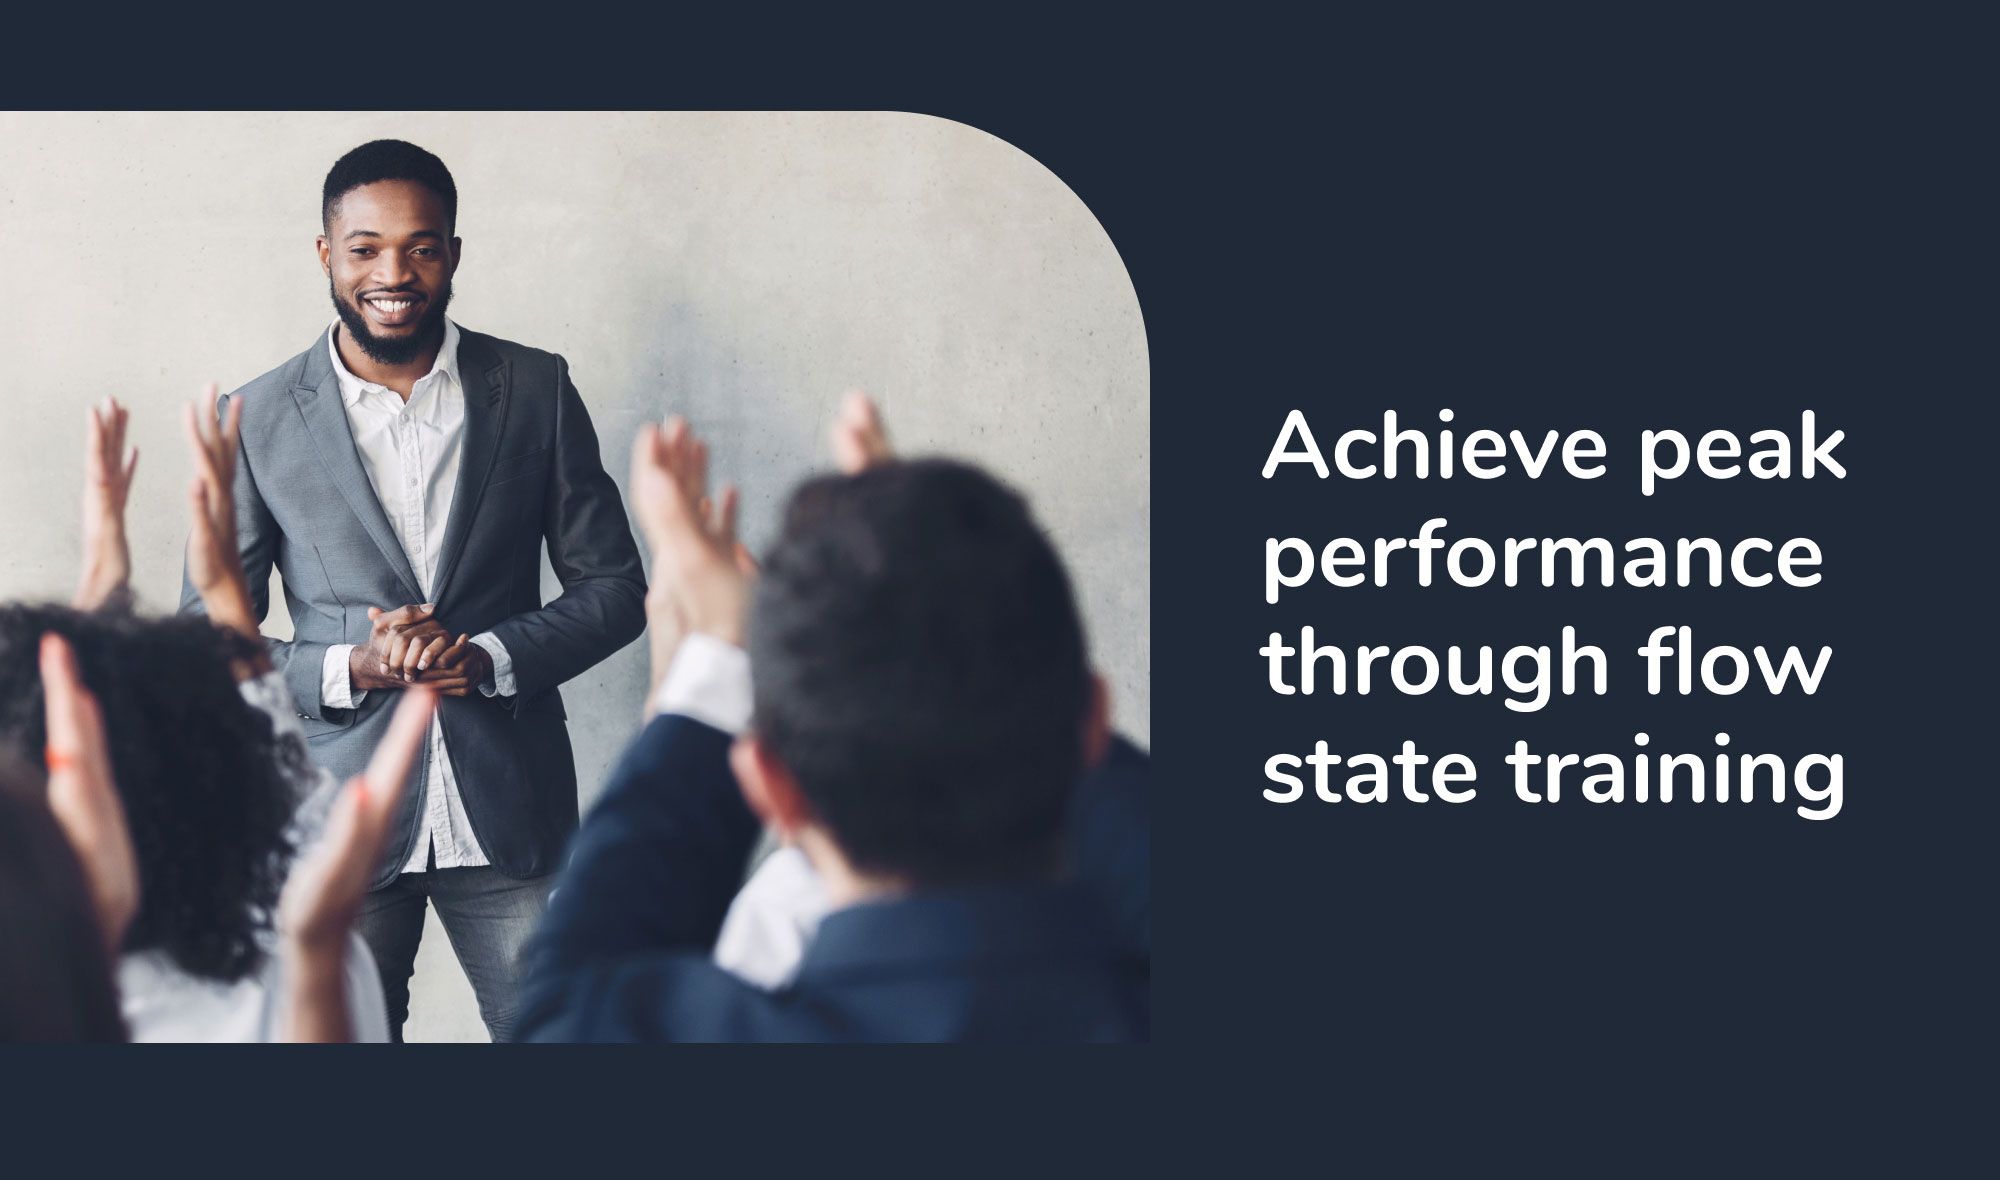 Flow state training - Achieve peak performance through flow state training